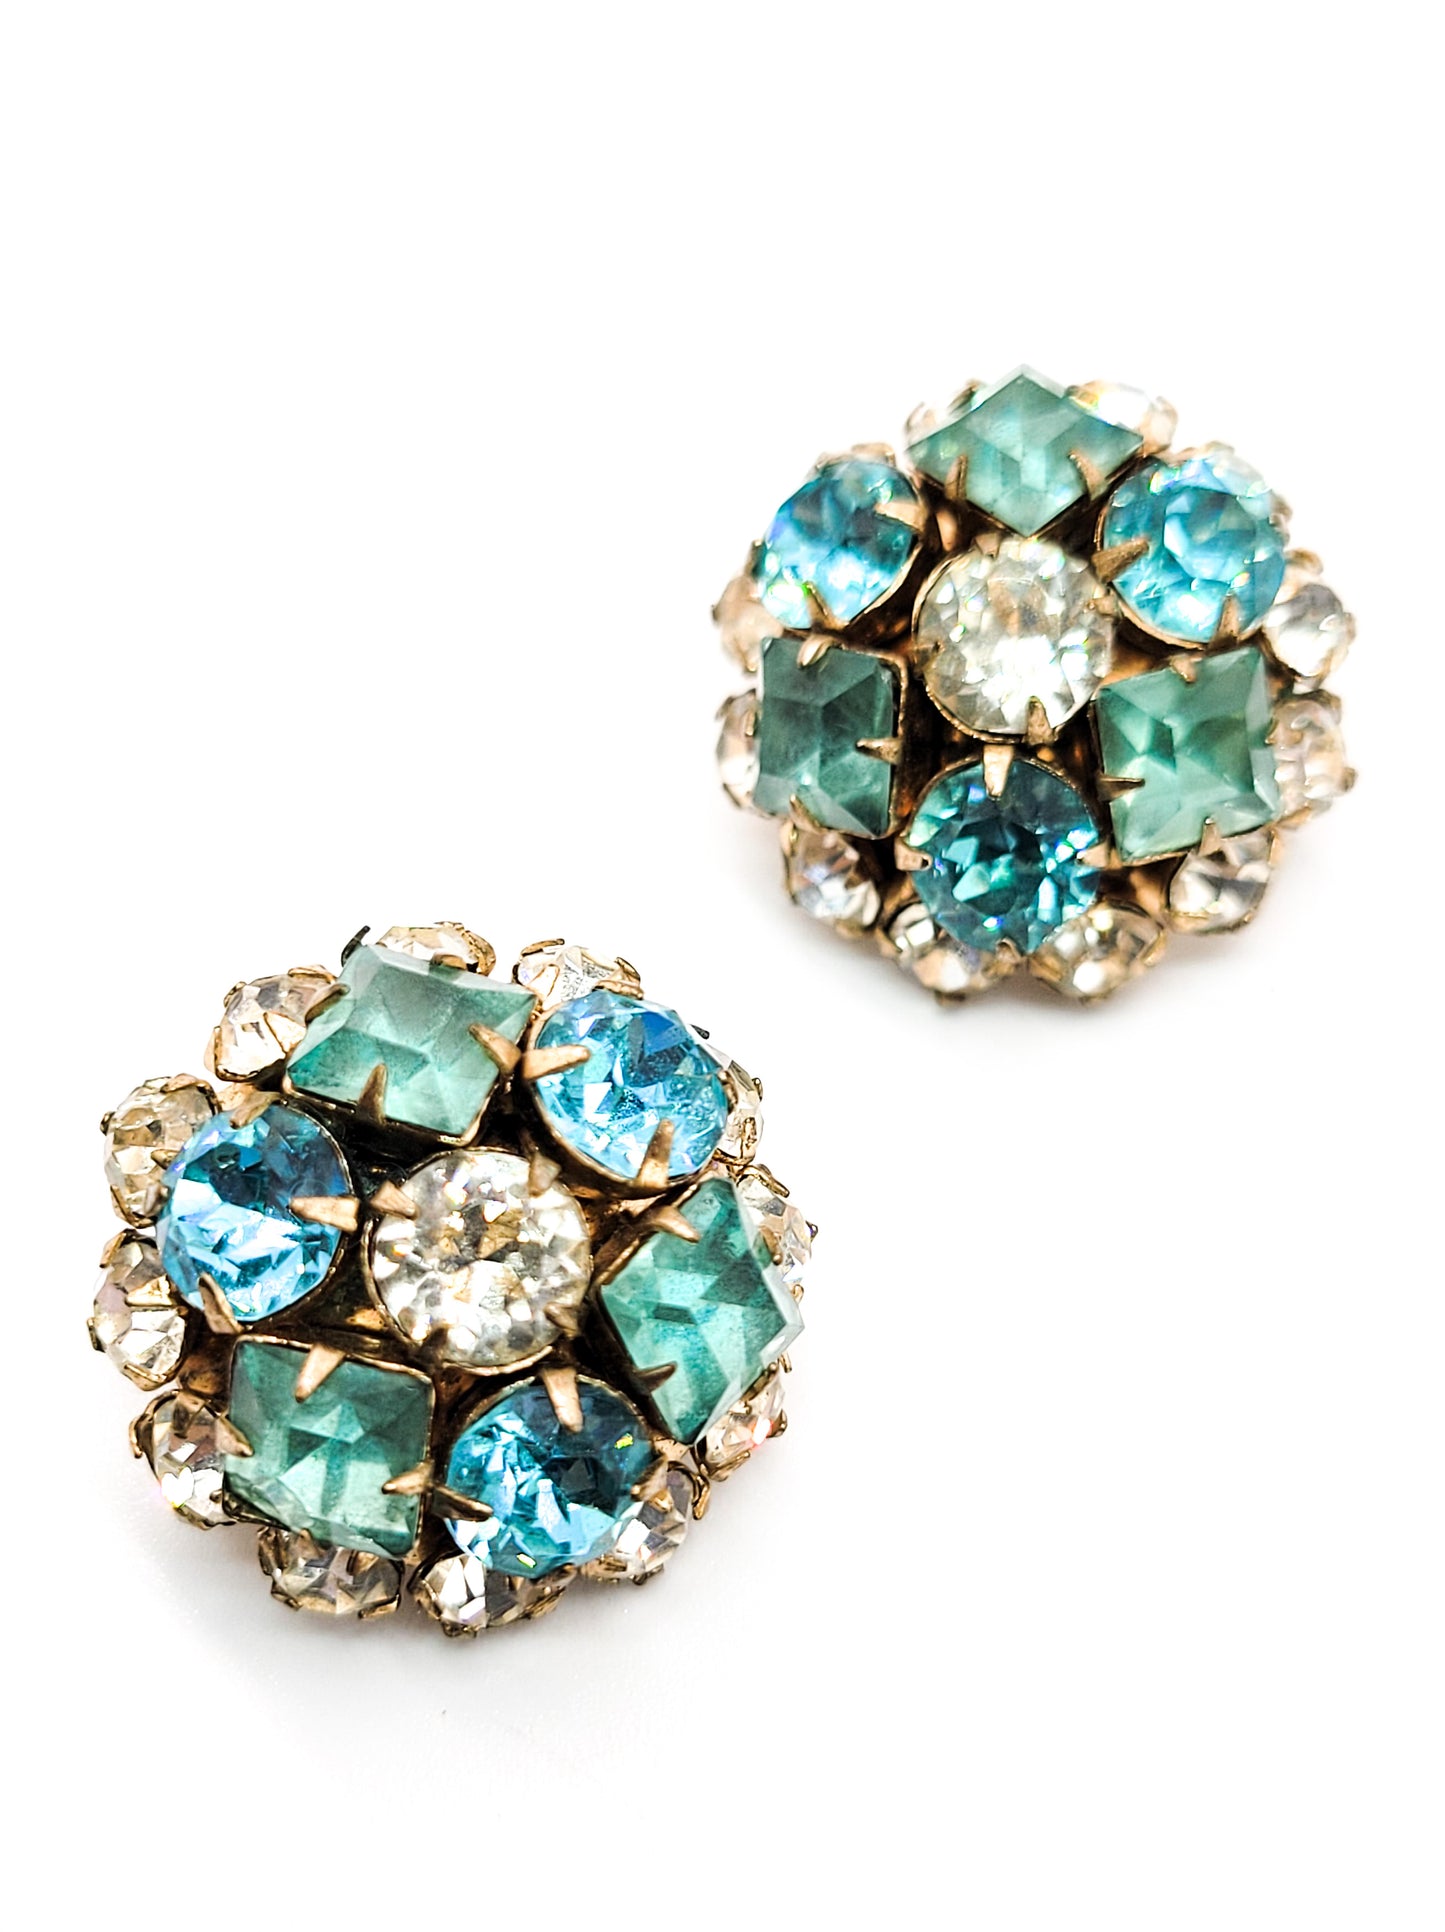 Aqua blue and clear princess cut set of vintage rhinestone brooch pins duet